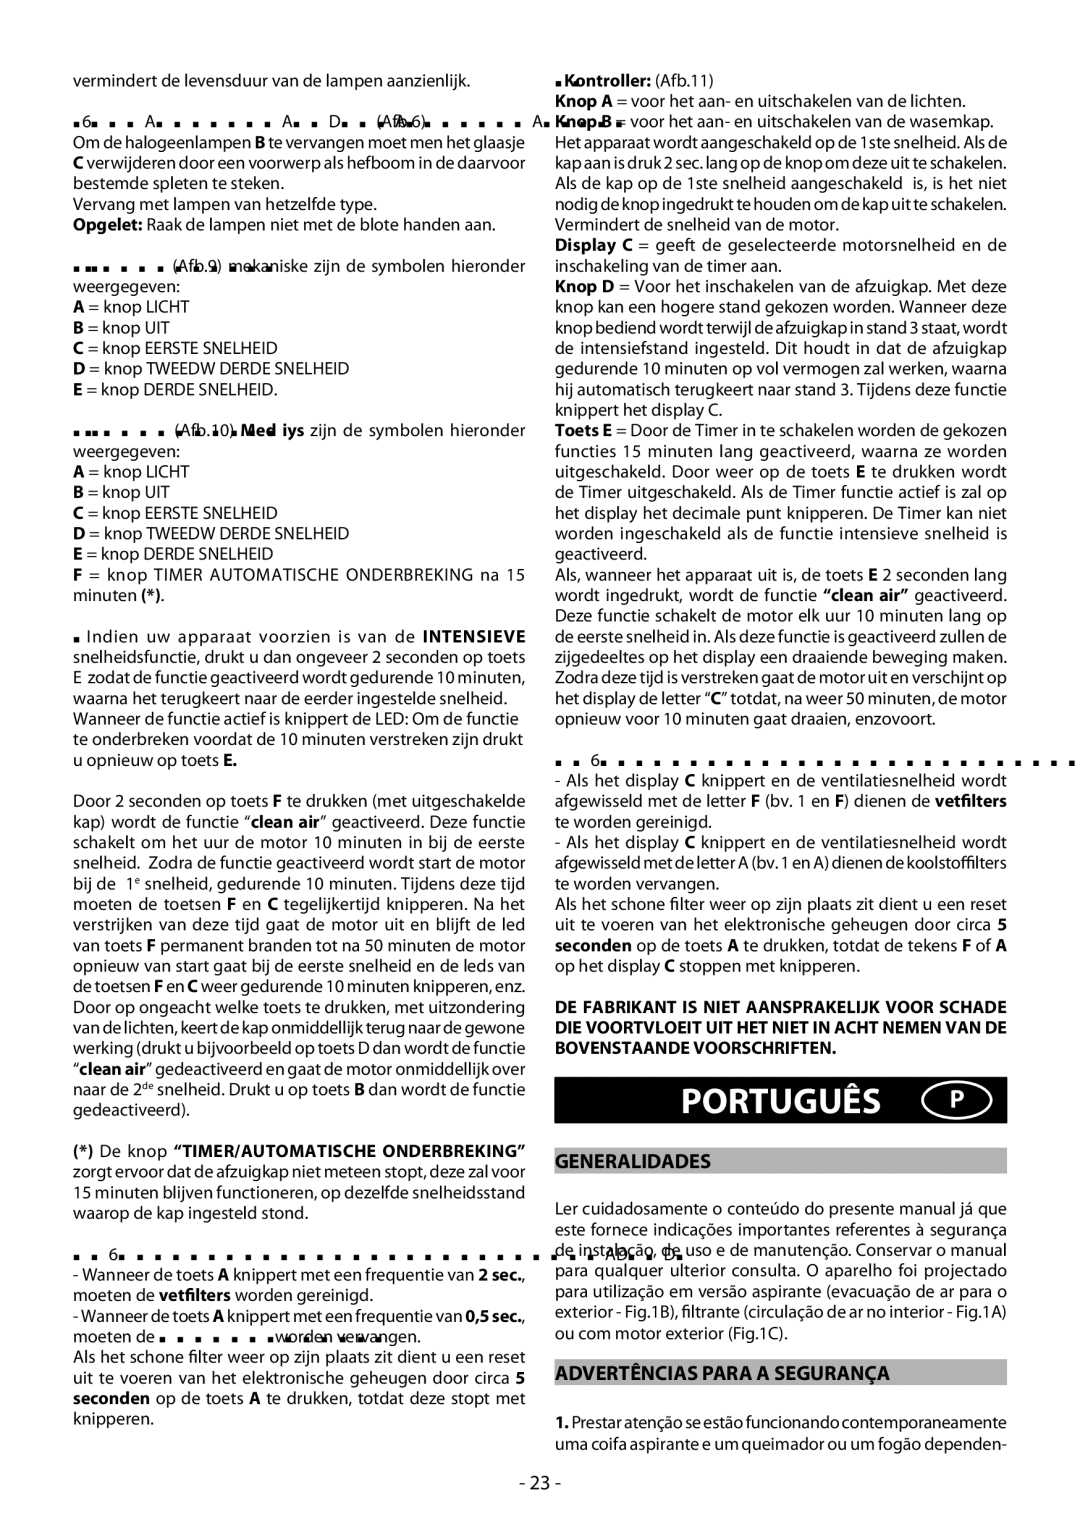 Beko HBG70X manual Português P, Advertências Para a Segurança, Vervanging van de halogeenlampen Afb.6, Kontroller Afb.11 